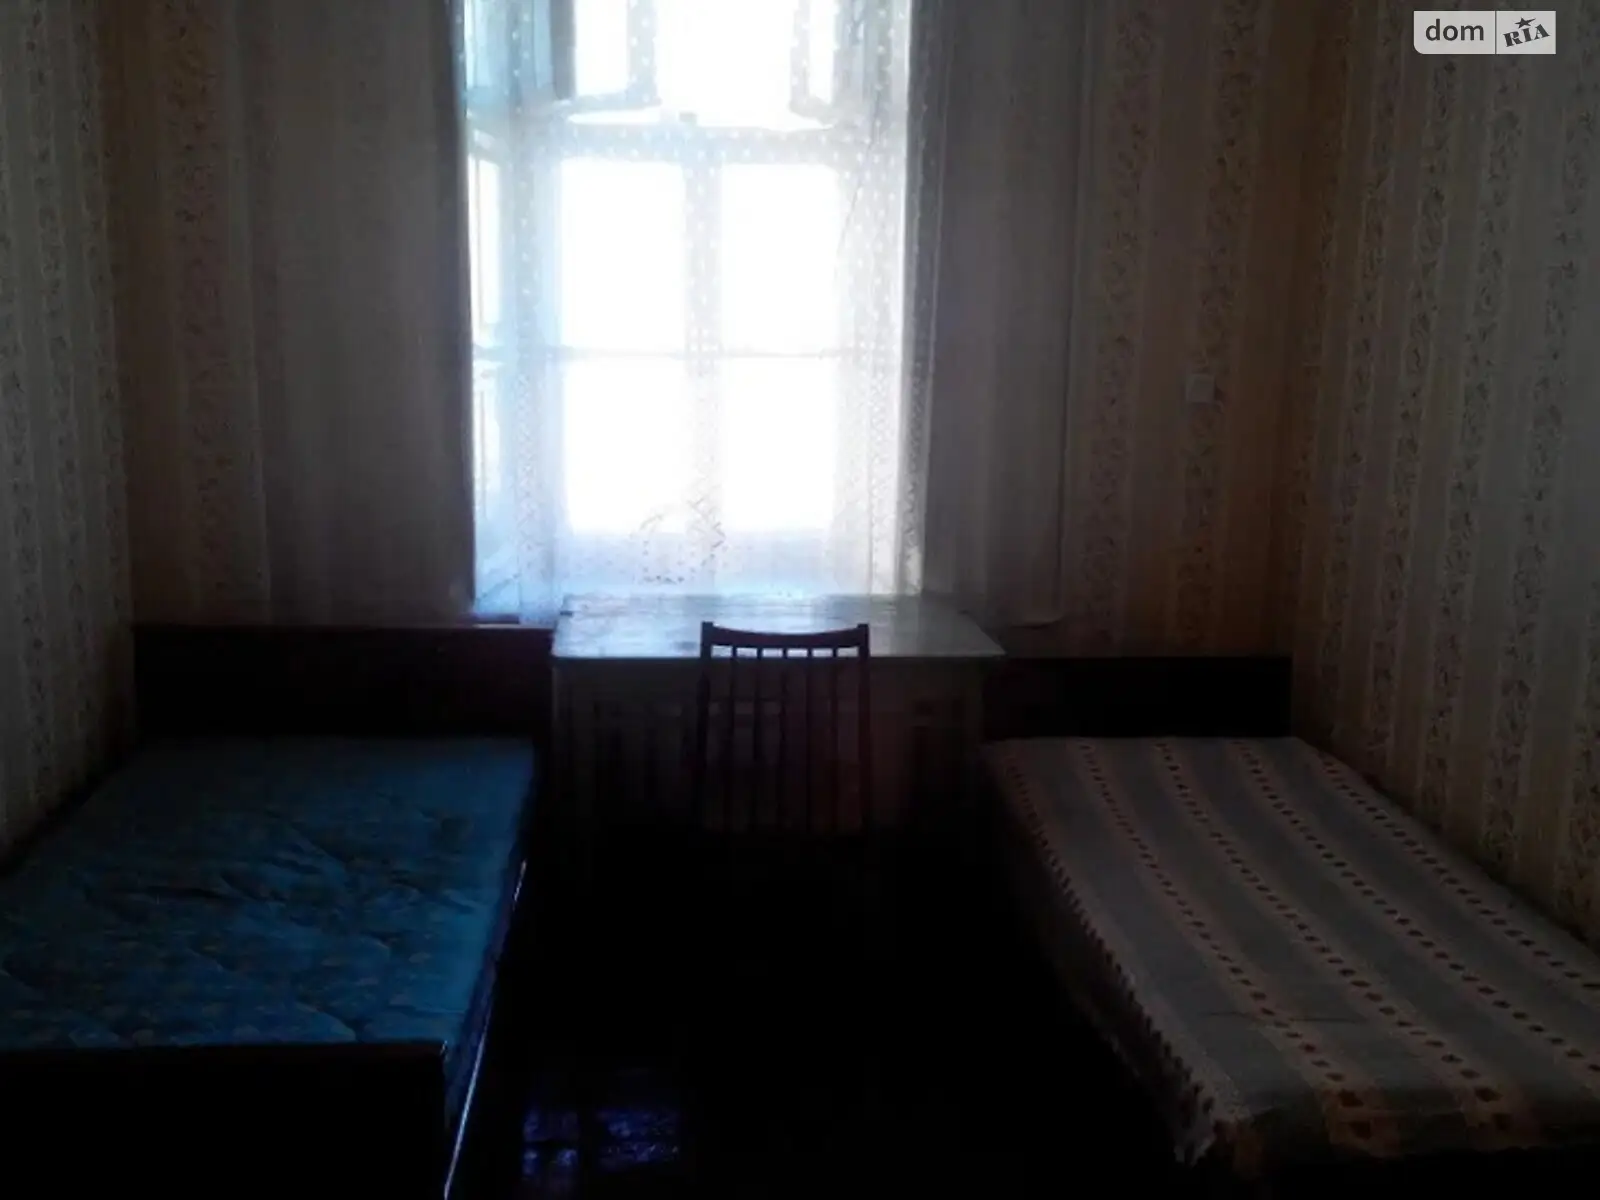 Продается комната 20 кв. м в Одессе, цена: 18000 $ - фото 1